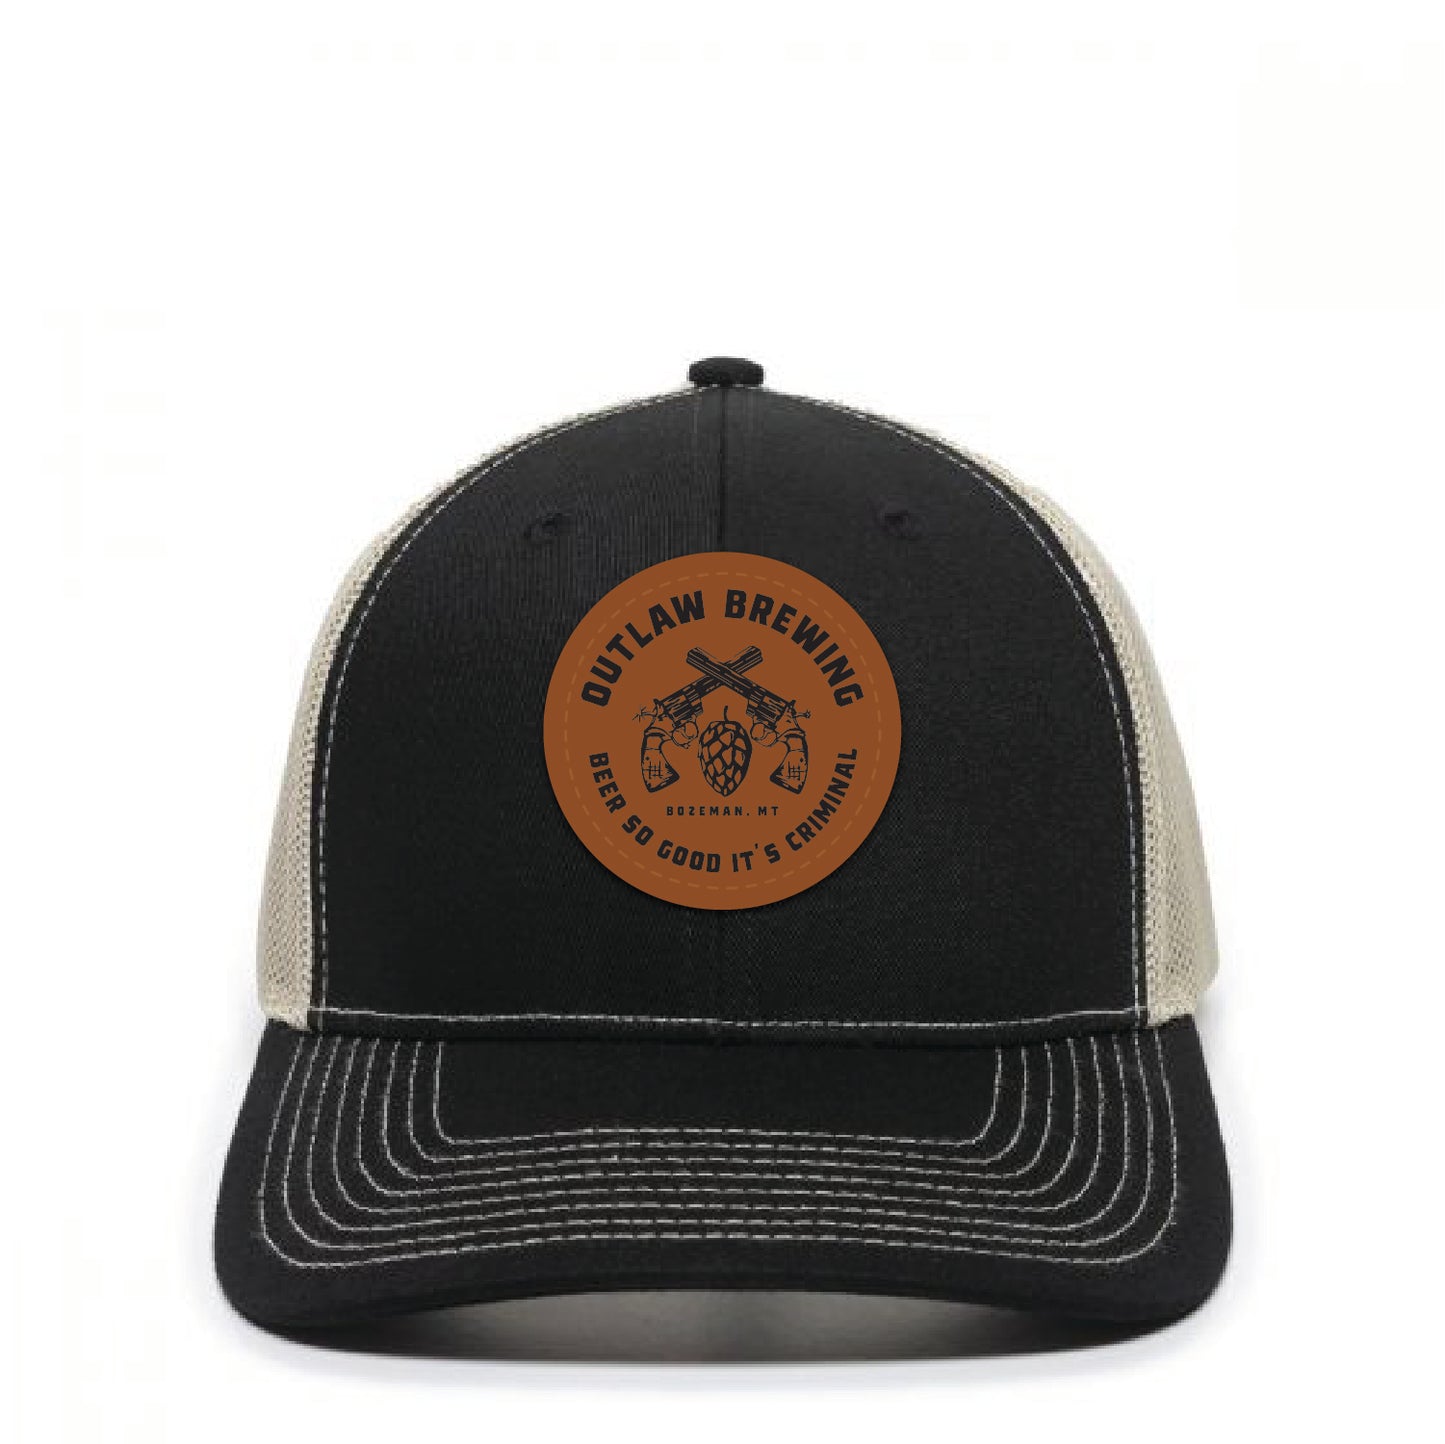 Outlaw Brewing Trucker Hat